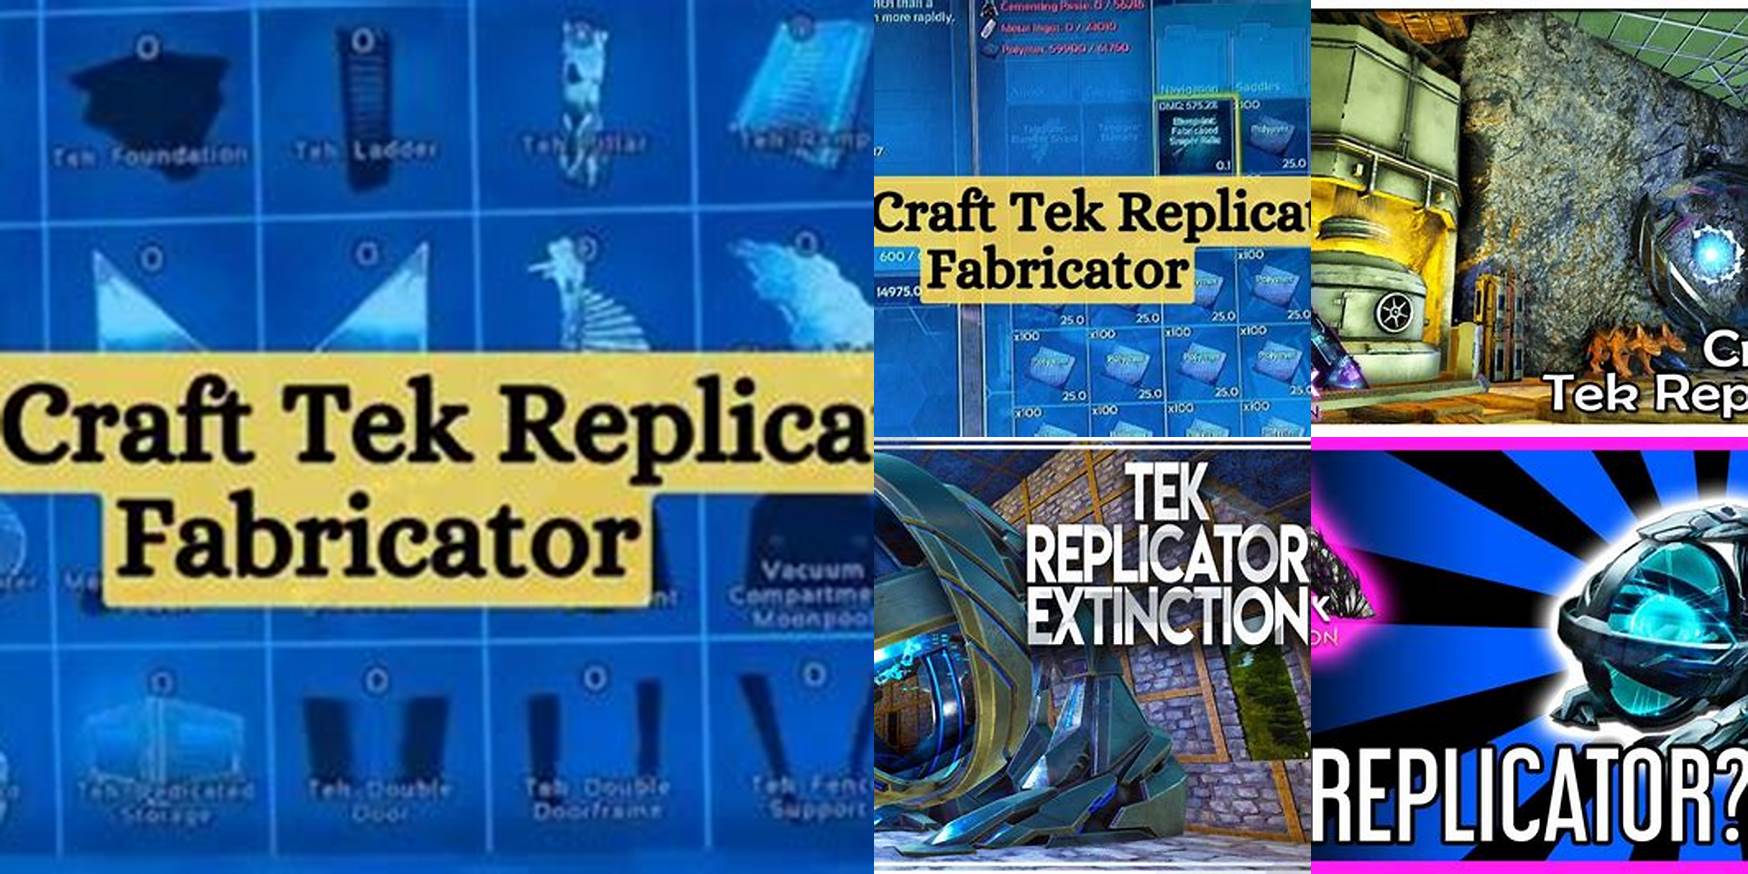 How To Craft Tek Replicator In Fabricator